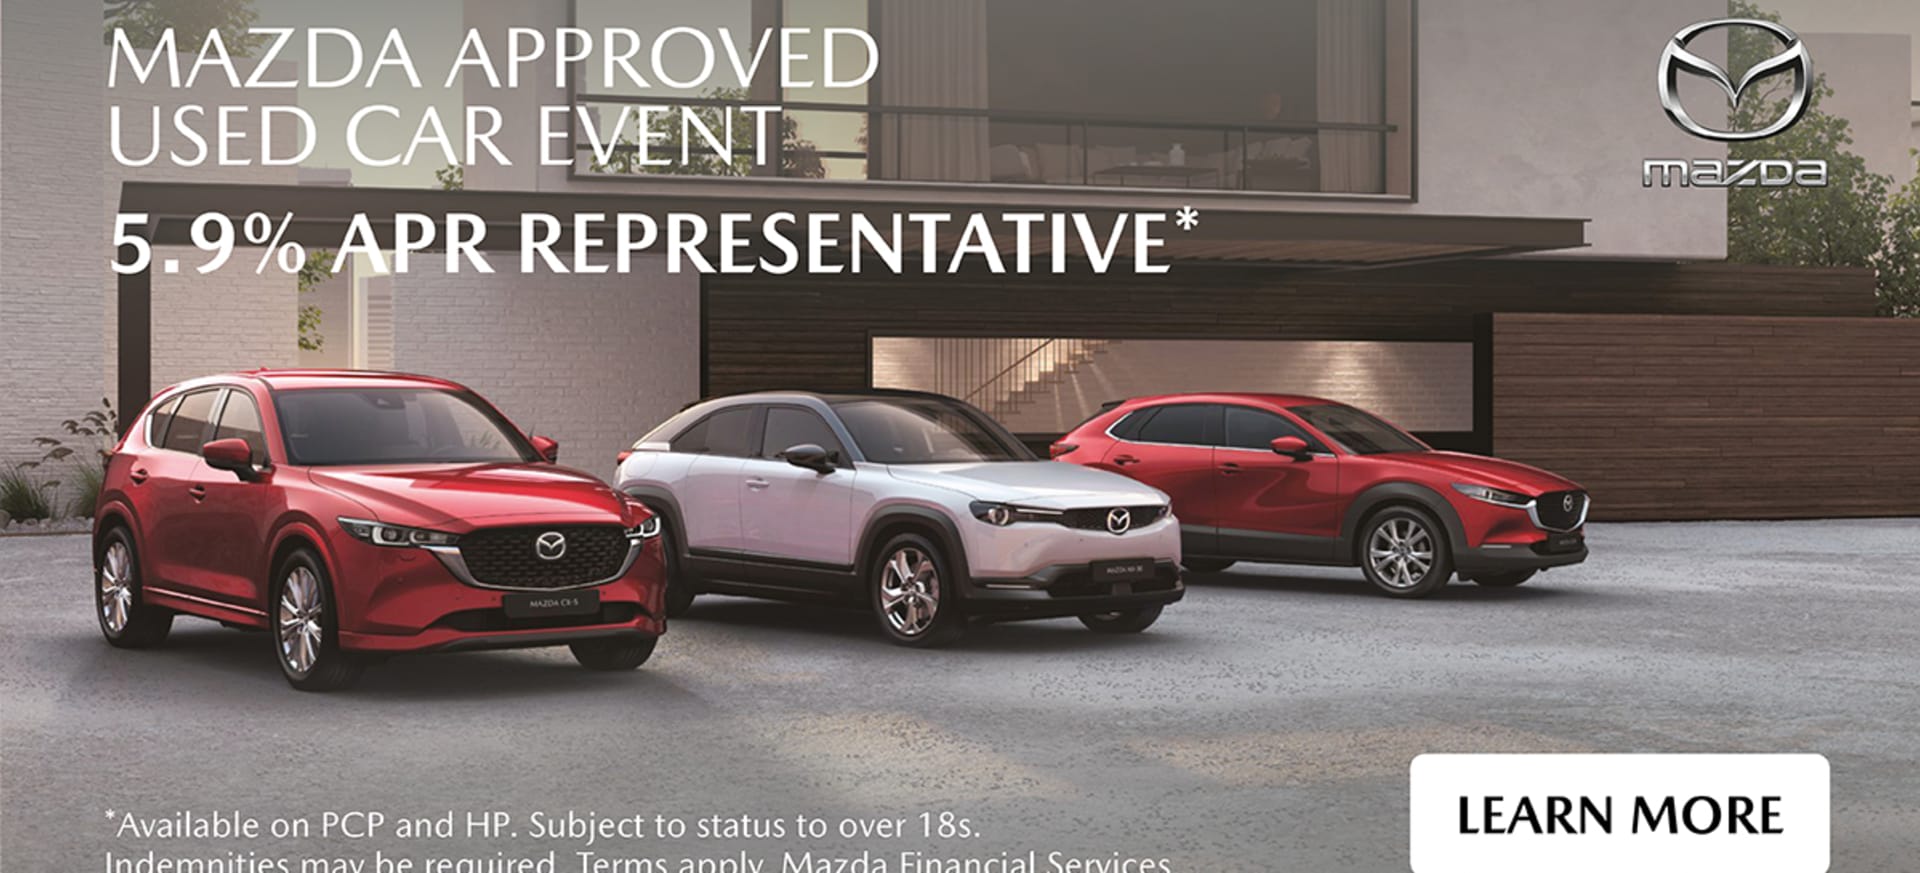 Mazda Used Car Event